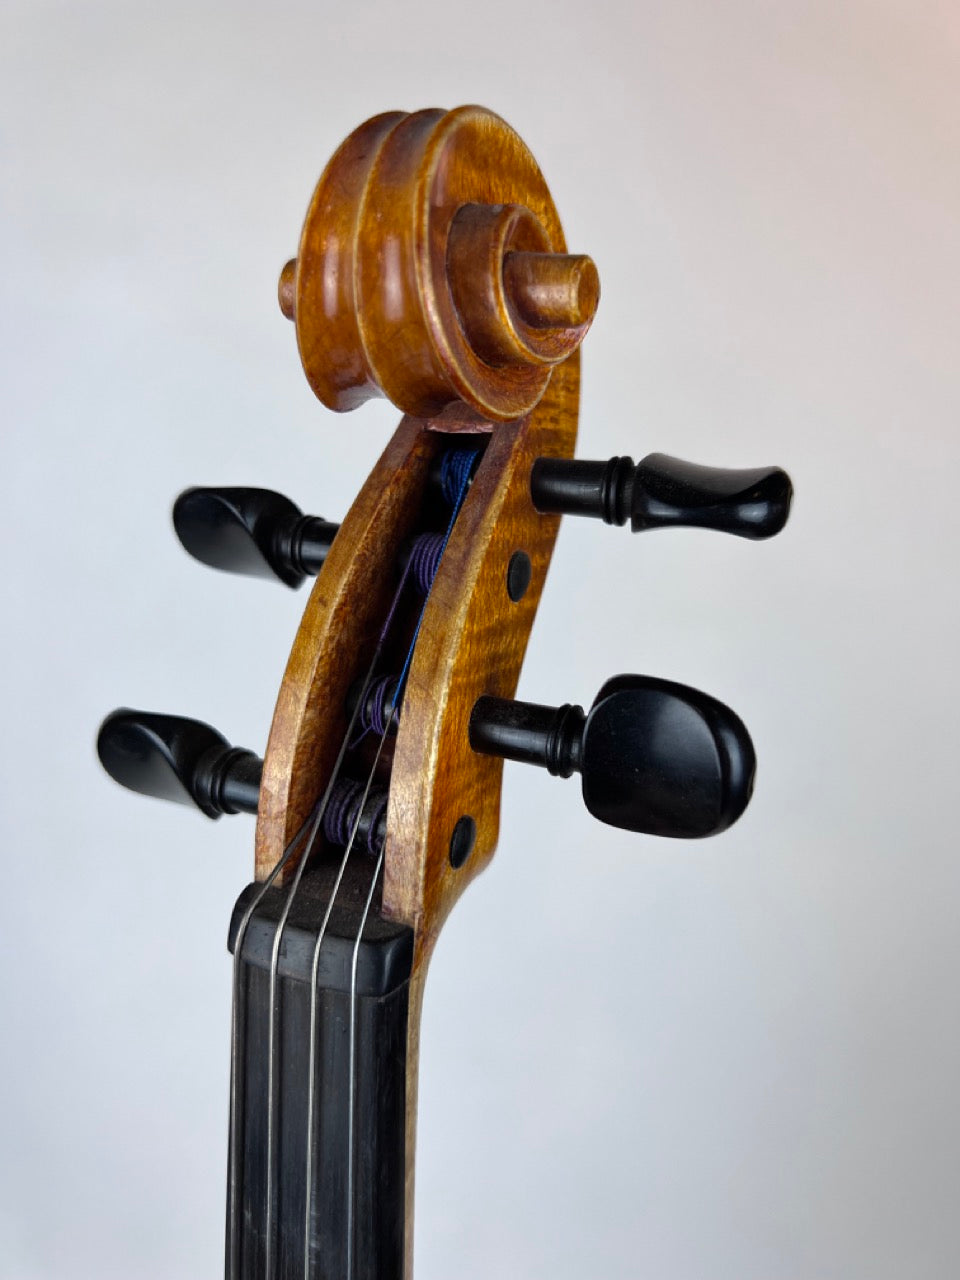 1990s Chinese Masterworks Stradivarius Violin Copy